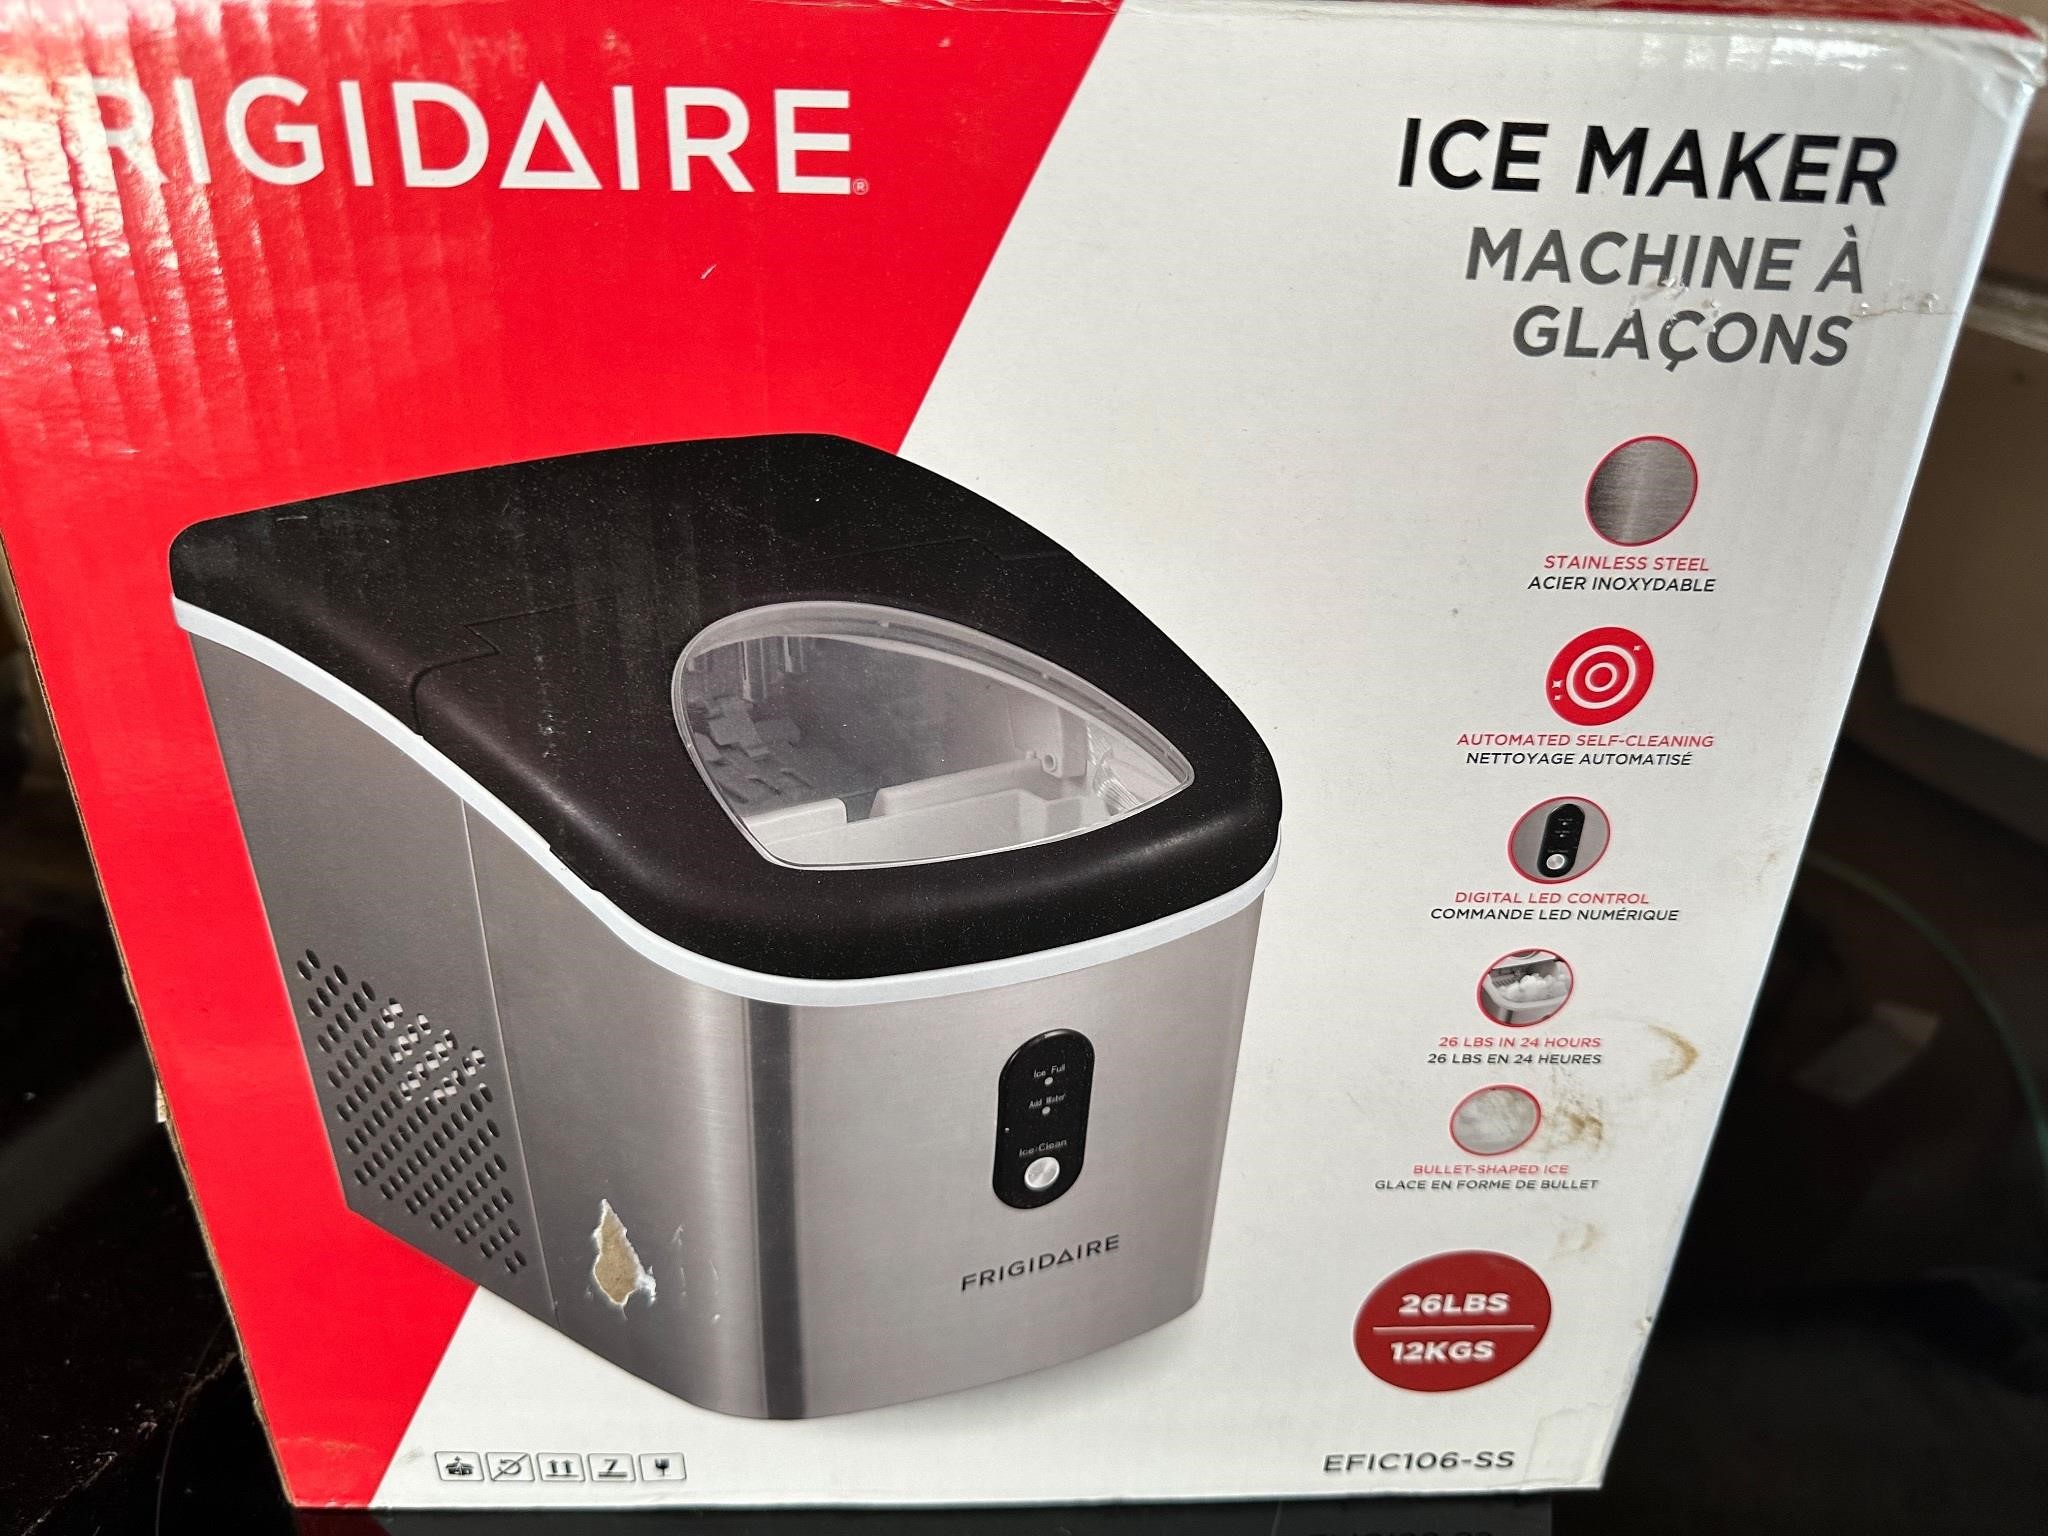 Frigidaire 26-lbs ice maker